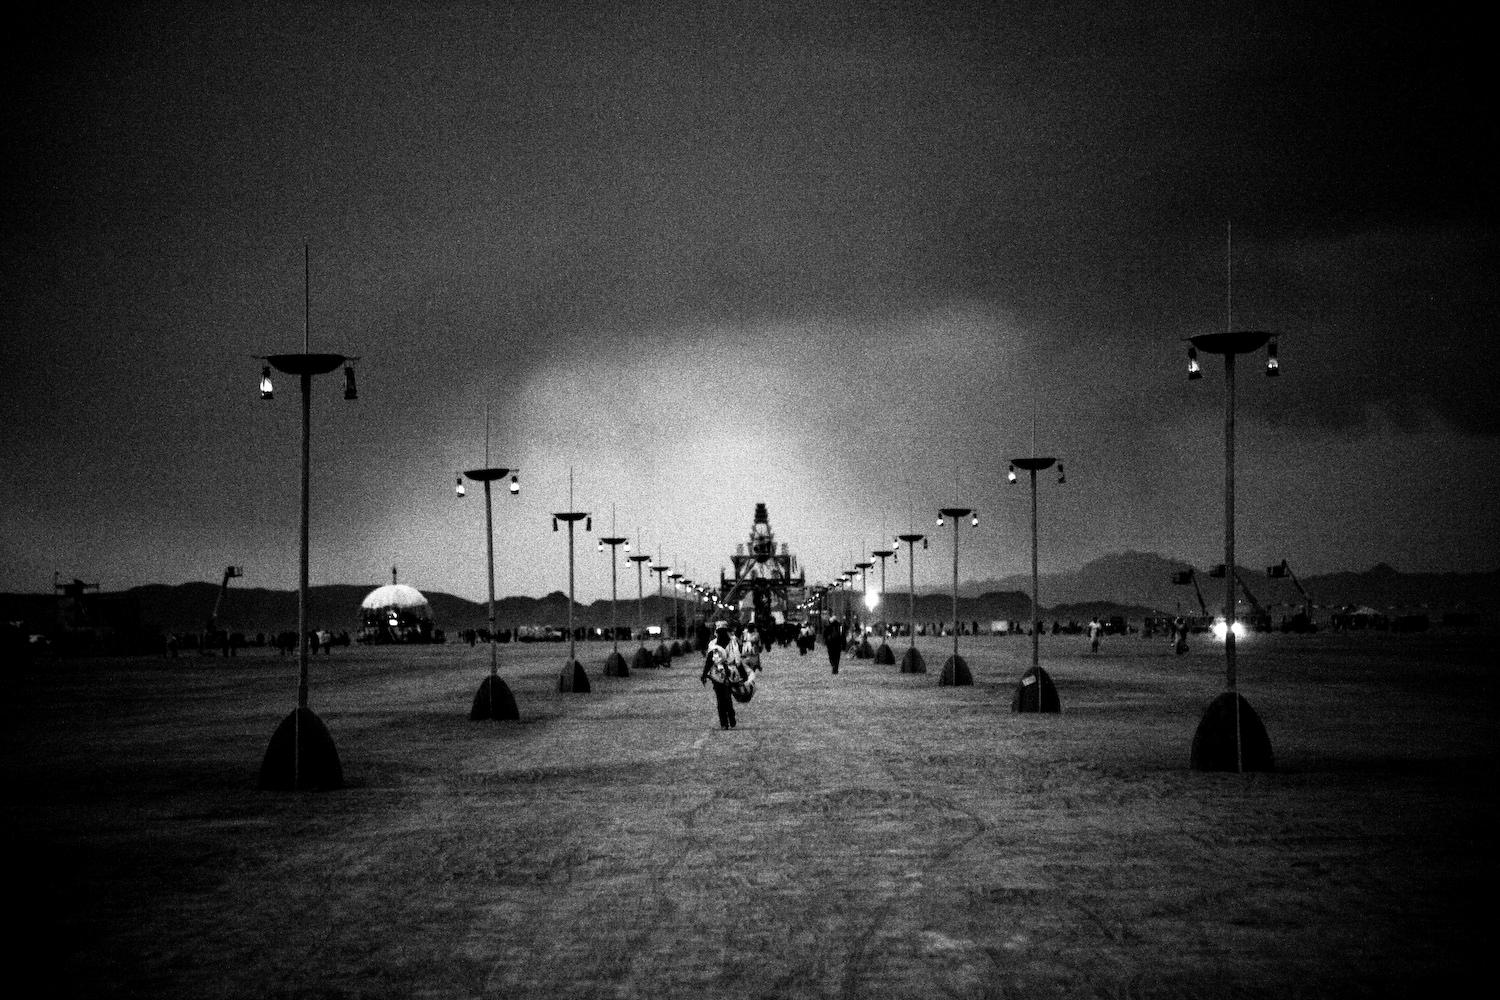 Tao Ruspoli Black and White Photograph - The Exaltation of Imagination, 21st Century, Landscape Photography